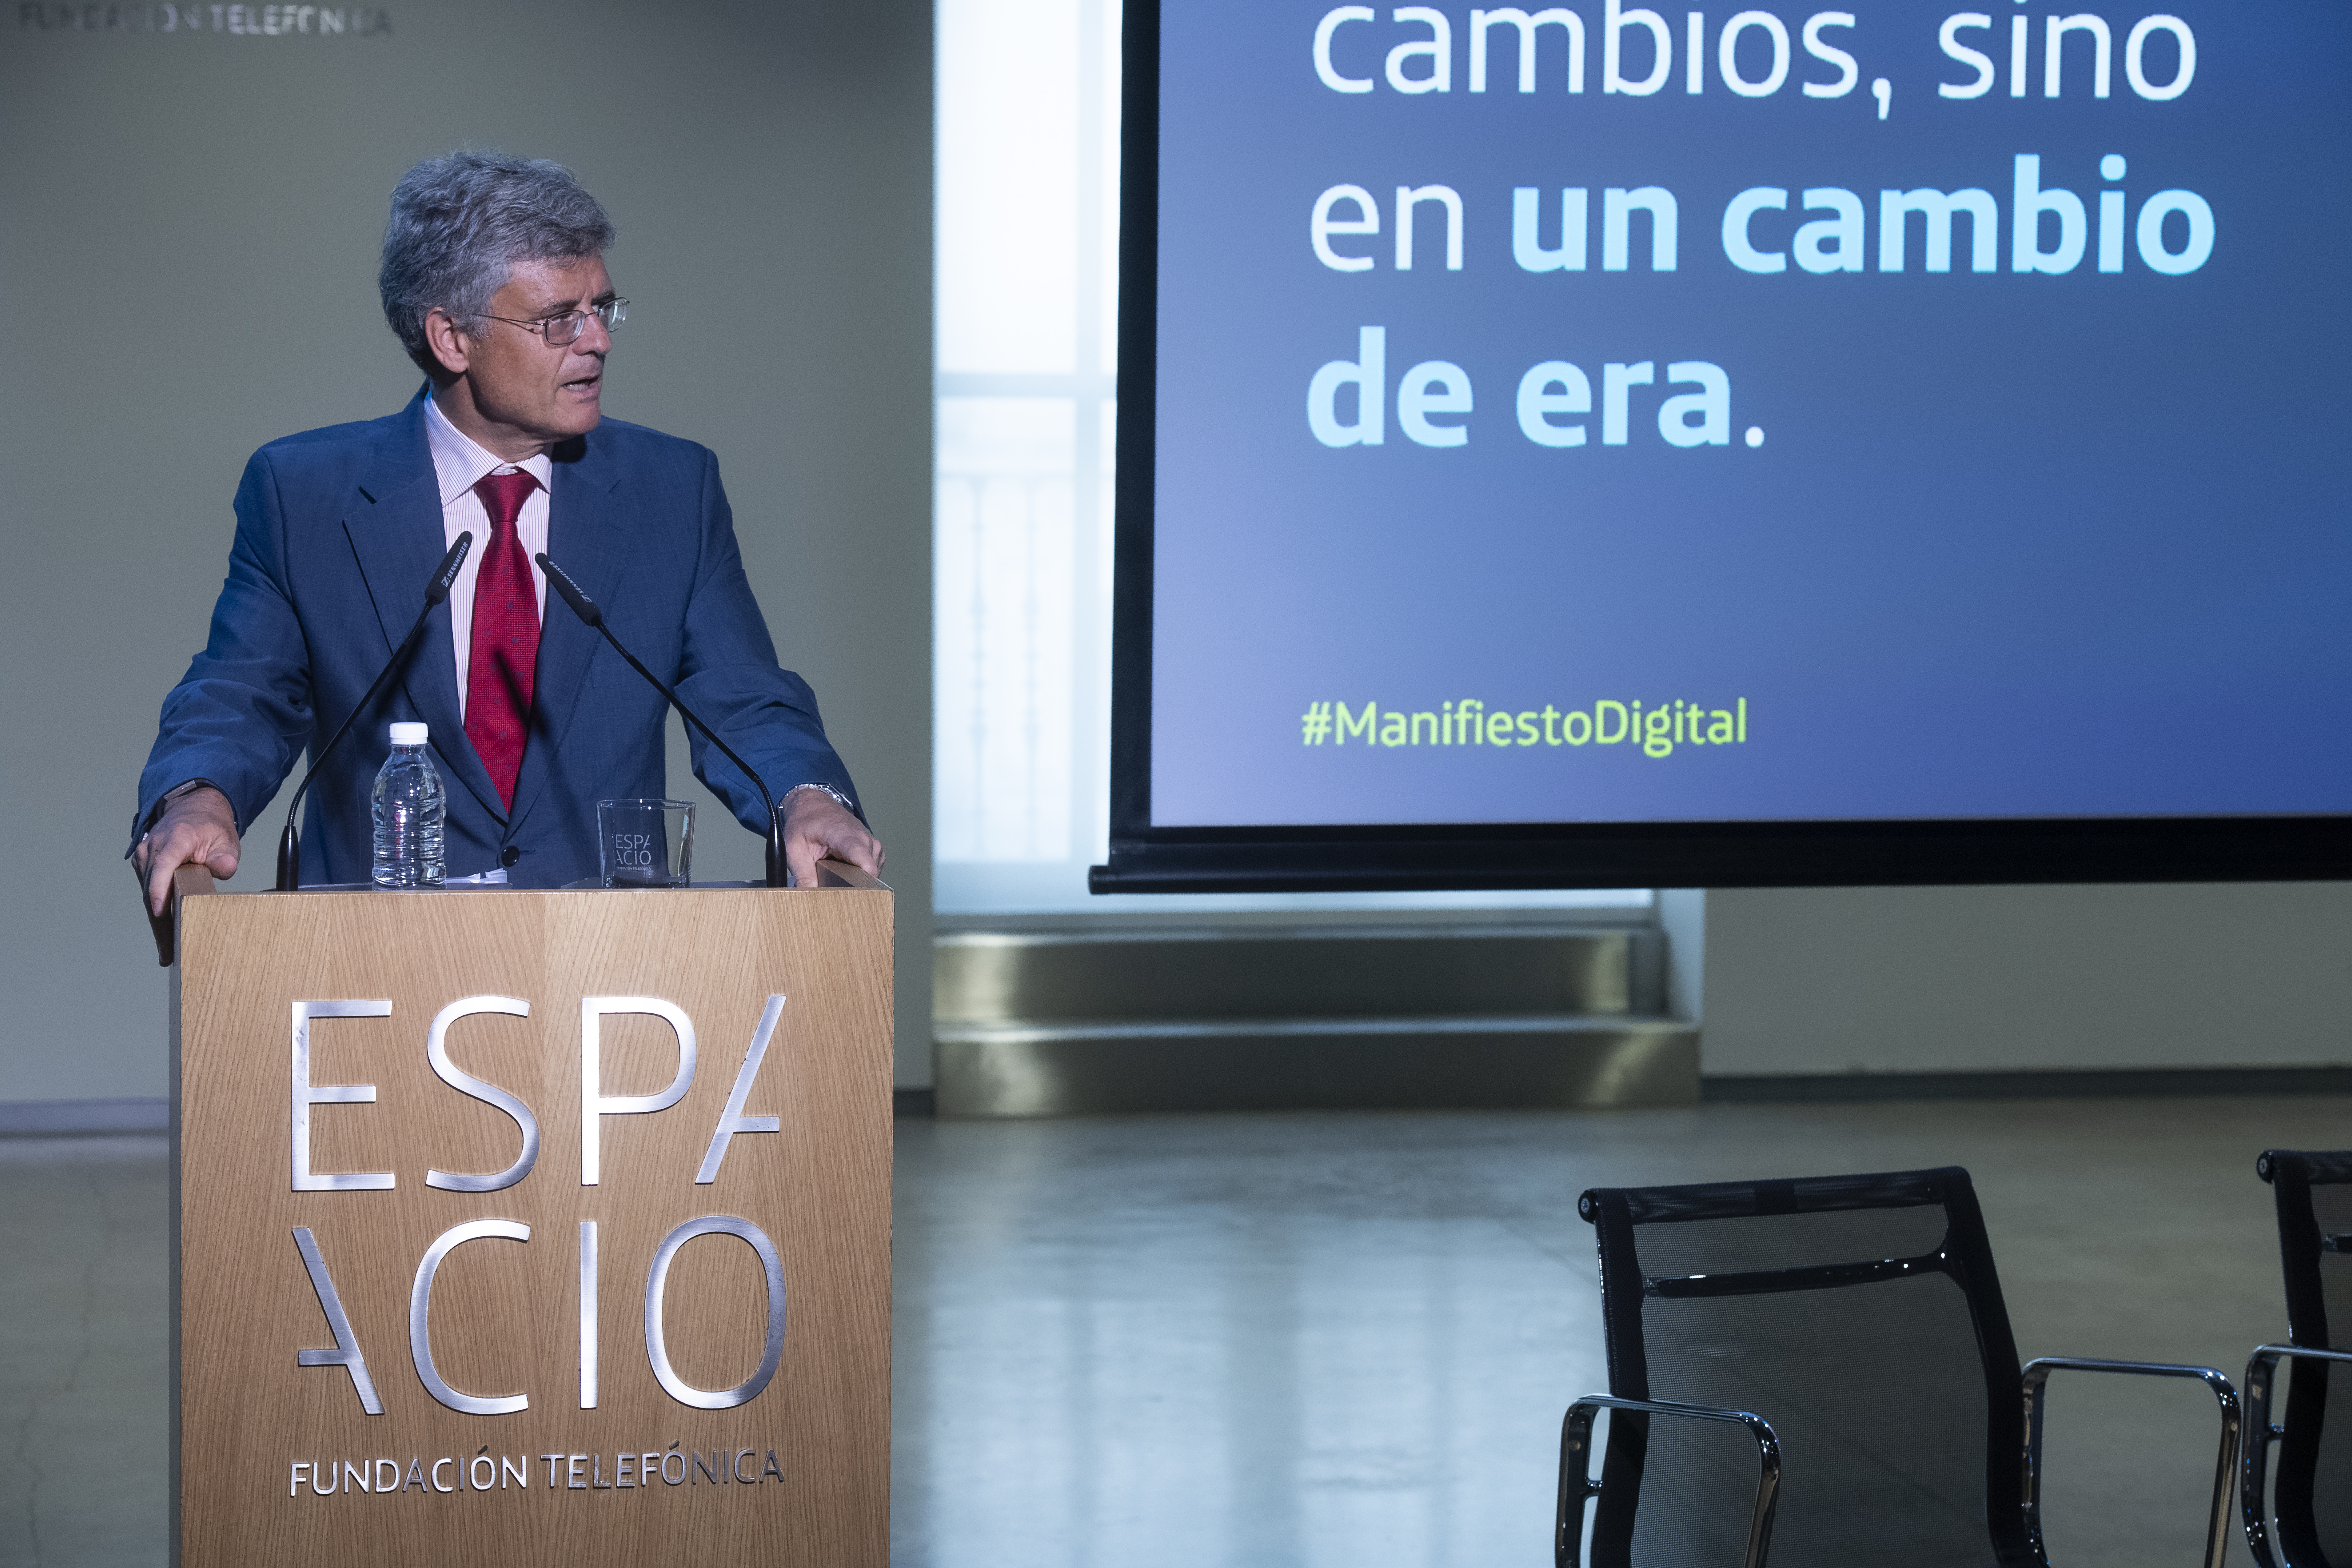 Pablo de Carvajal during his speech at Manifesto Digital presentation